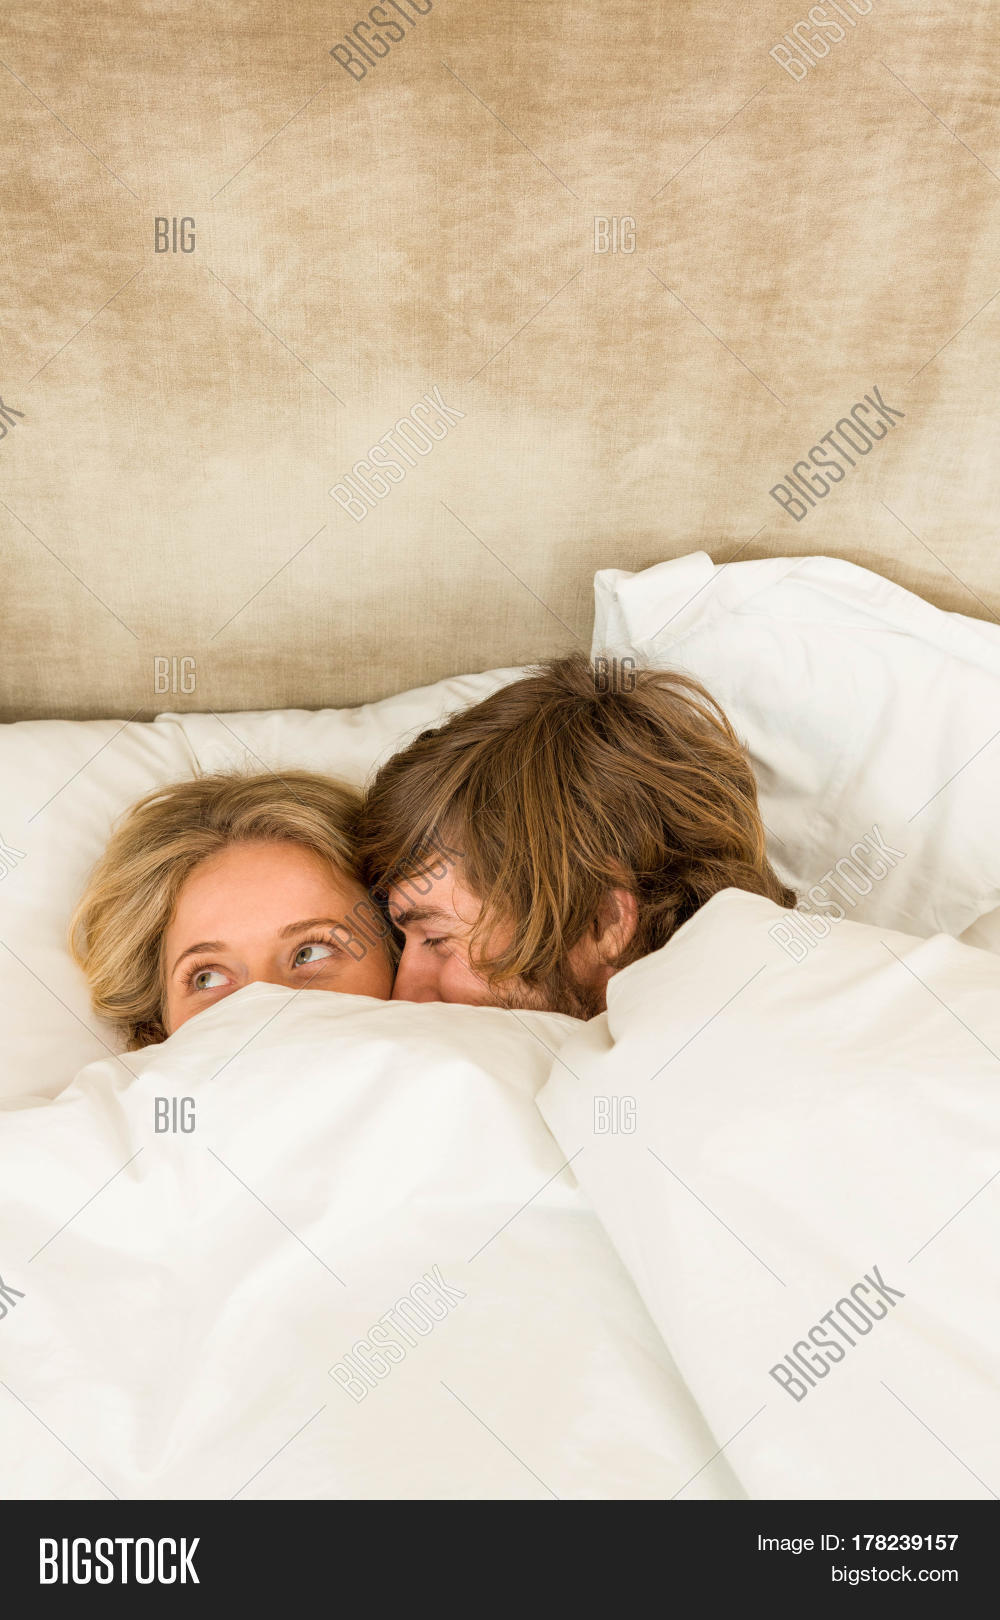 daniel oshiro recommends cute couples cuddling pic